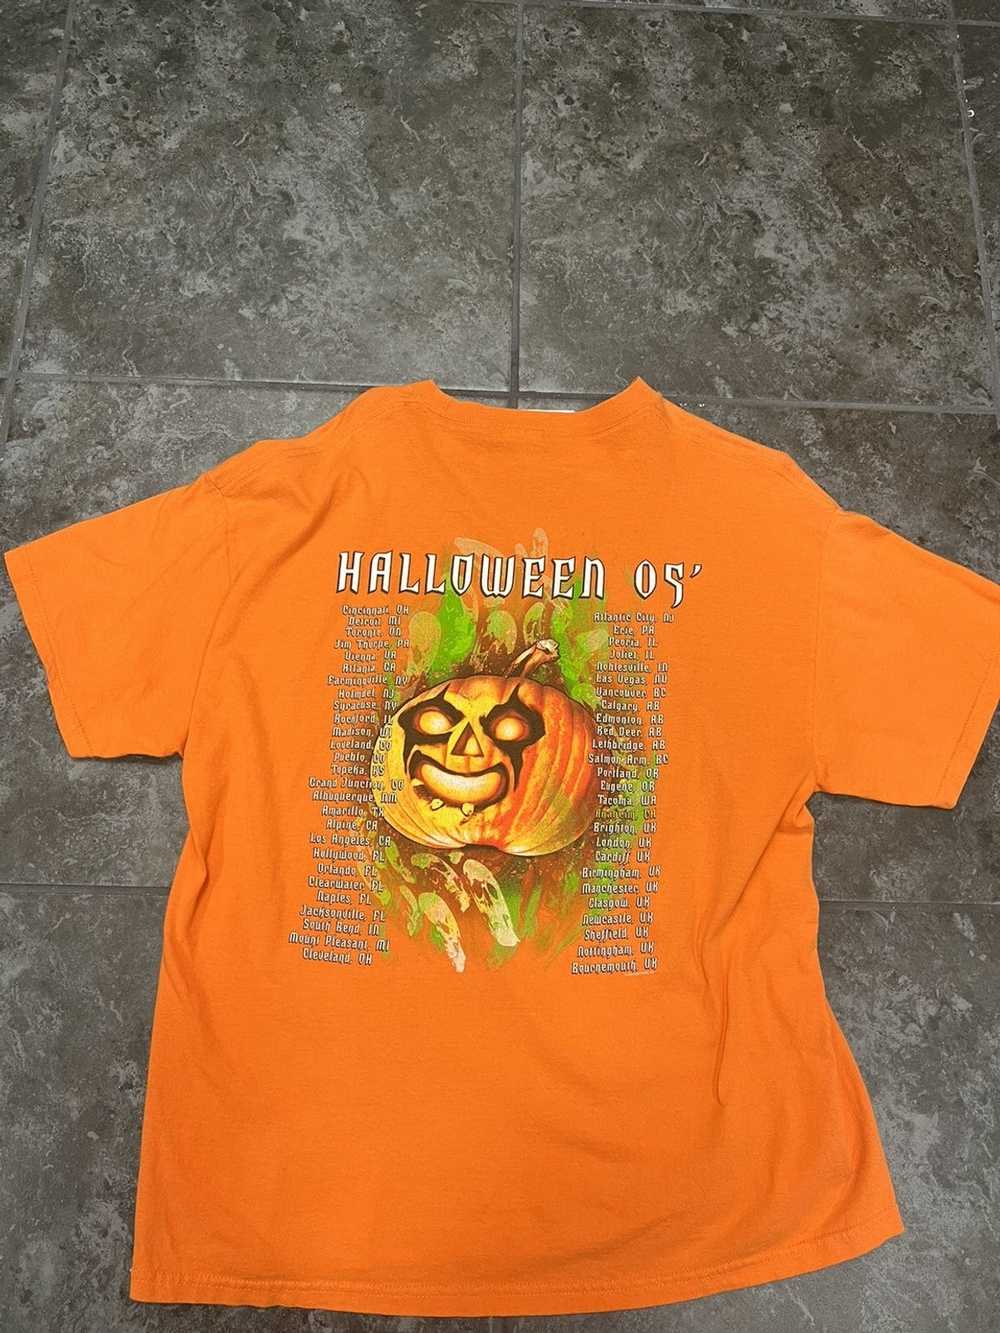 Vintage Alice Cooper Halloween 05 Tour Tshirt - image 3